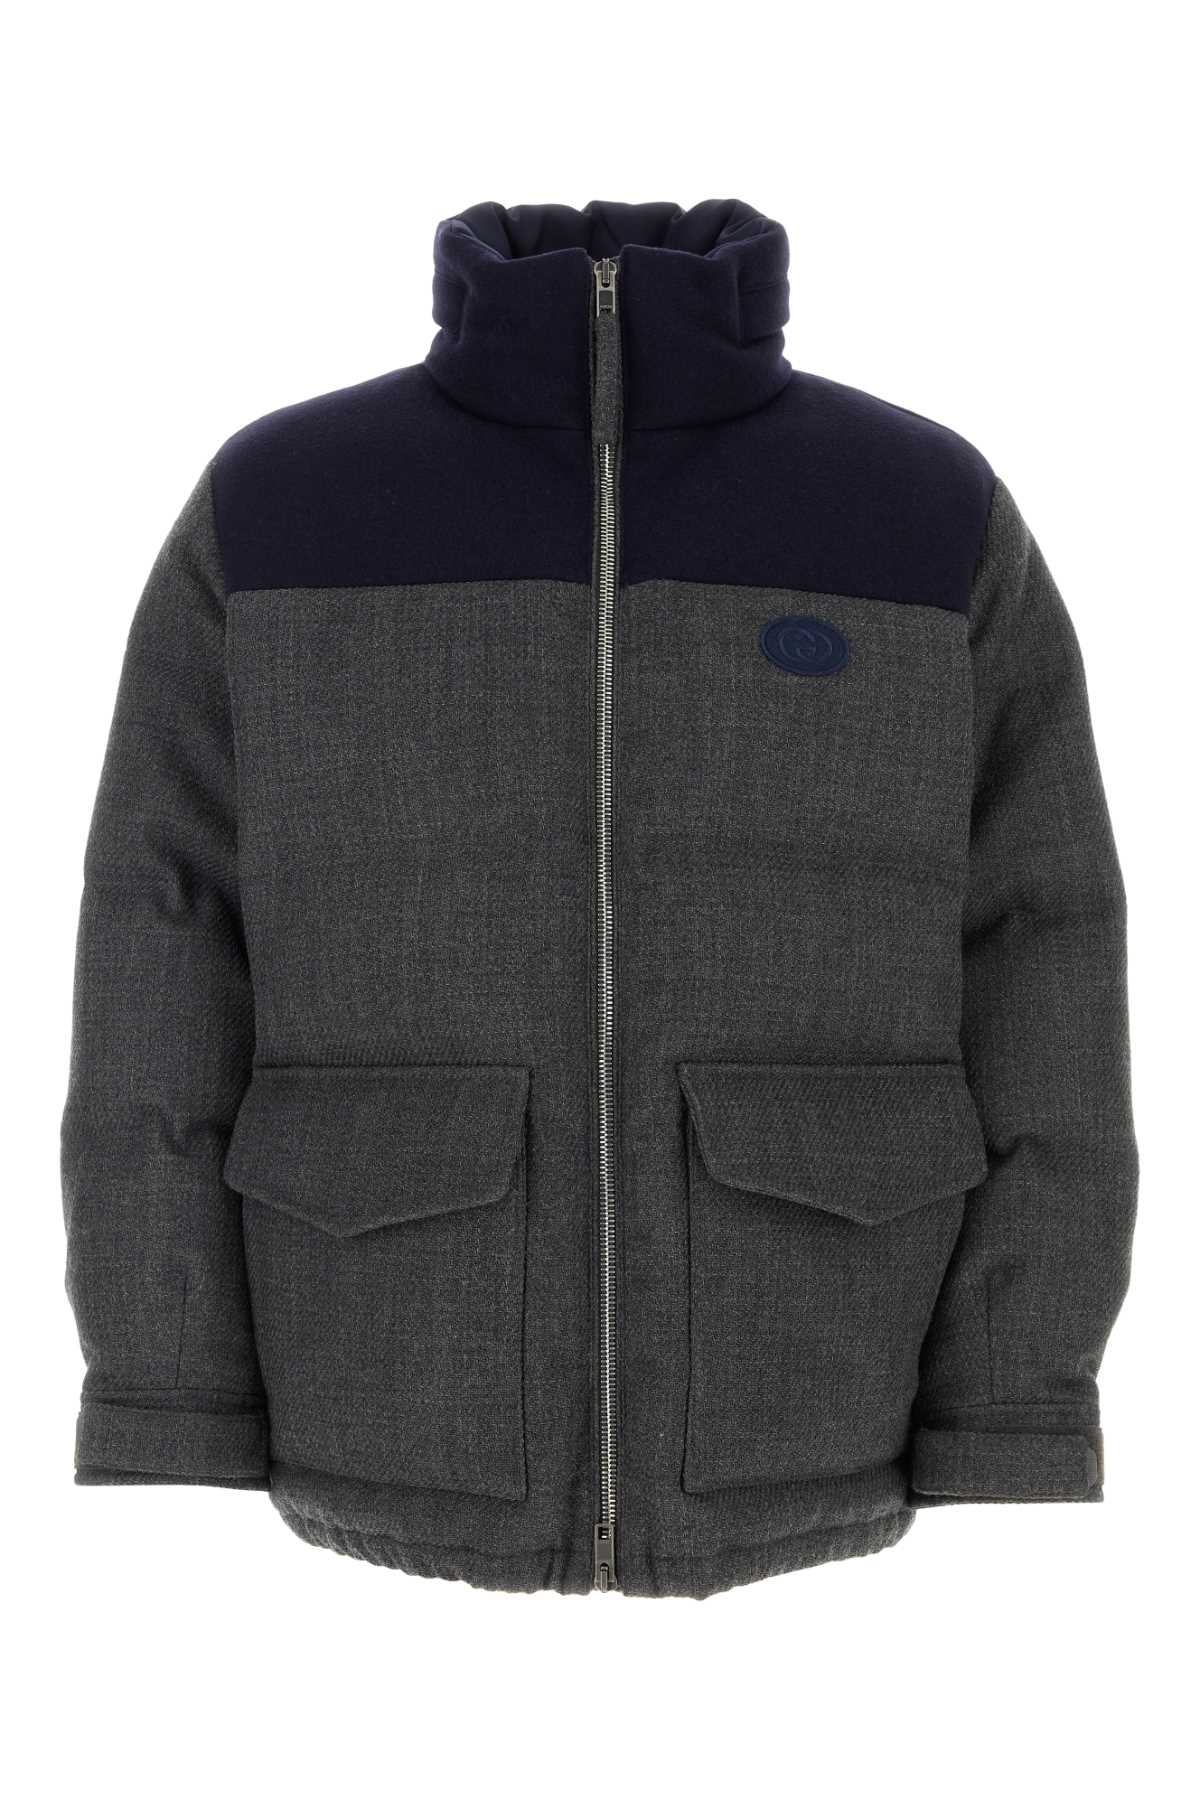 Shop Gucci Dark Grey Wool Blend Down Jacket In Greyblueredmix